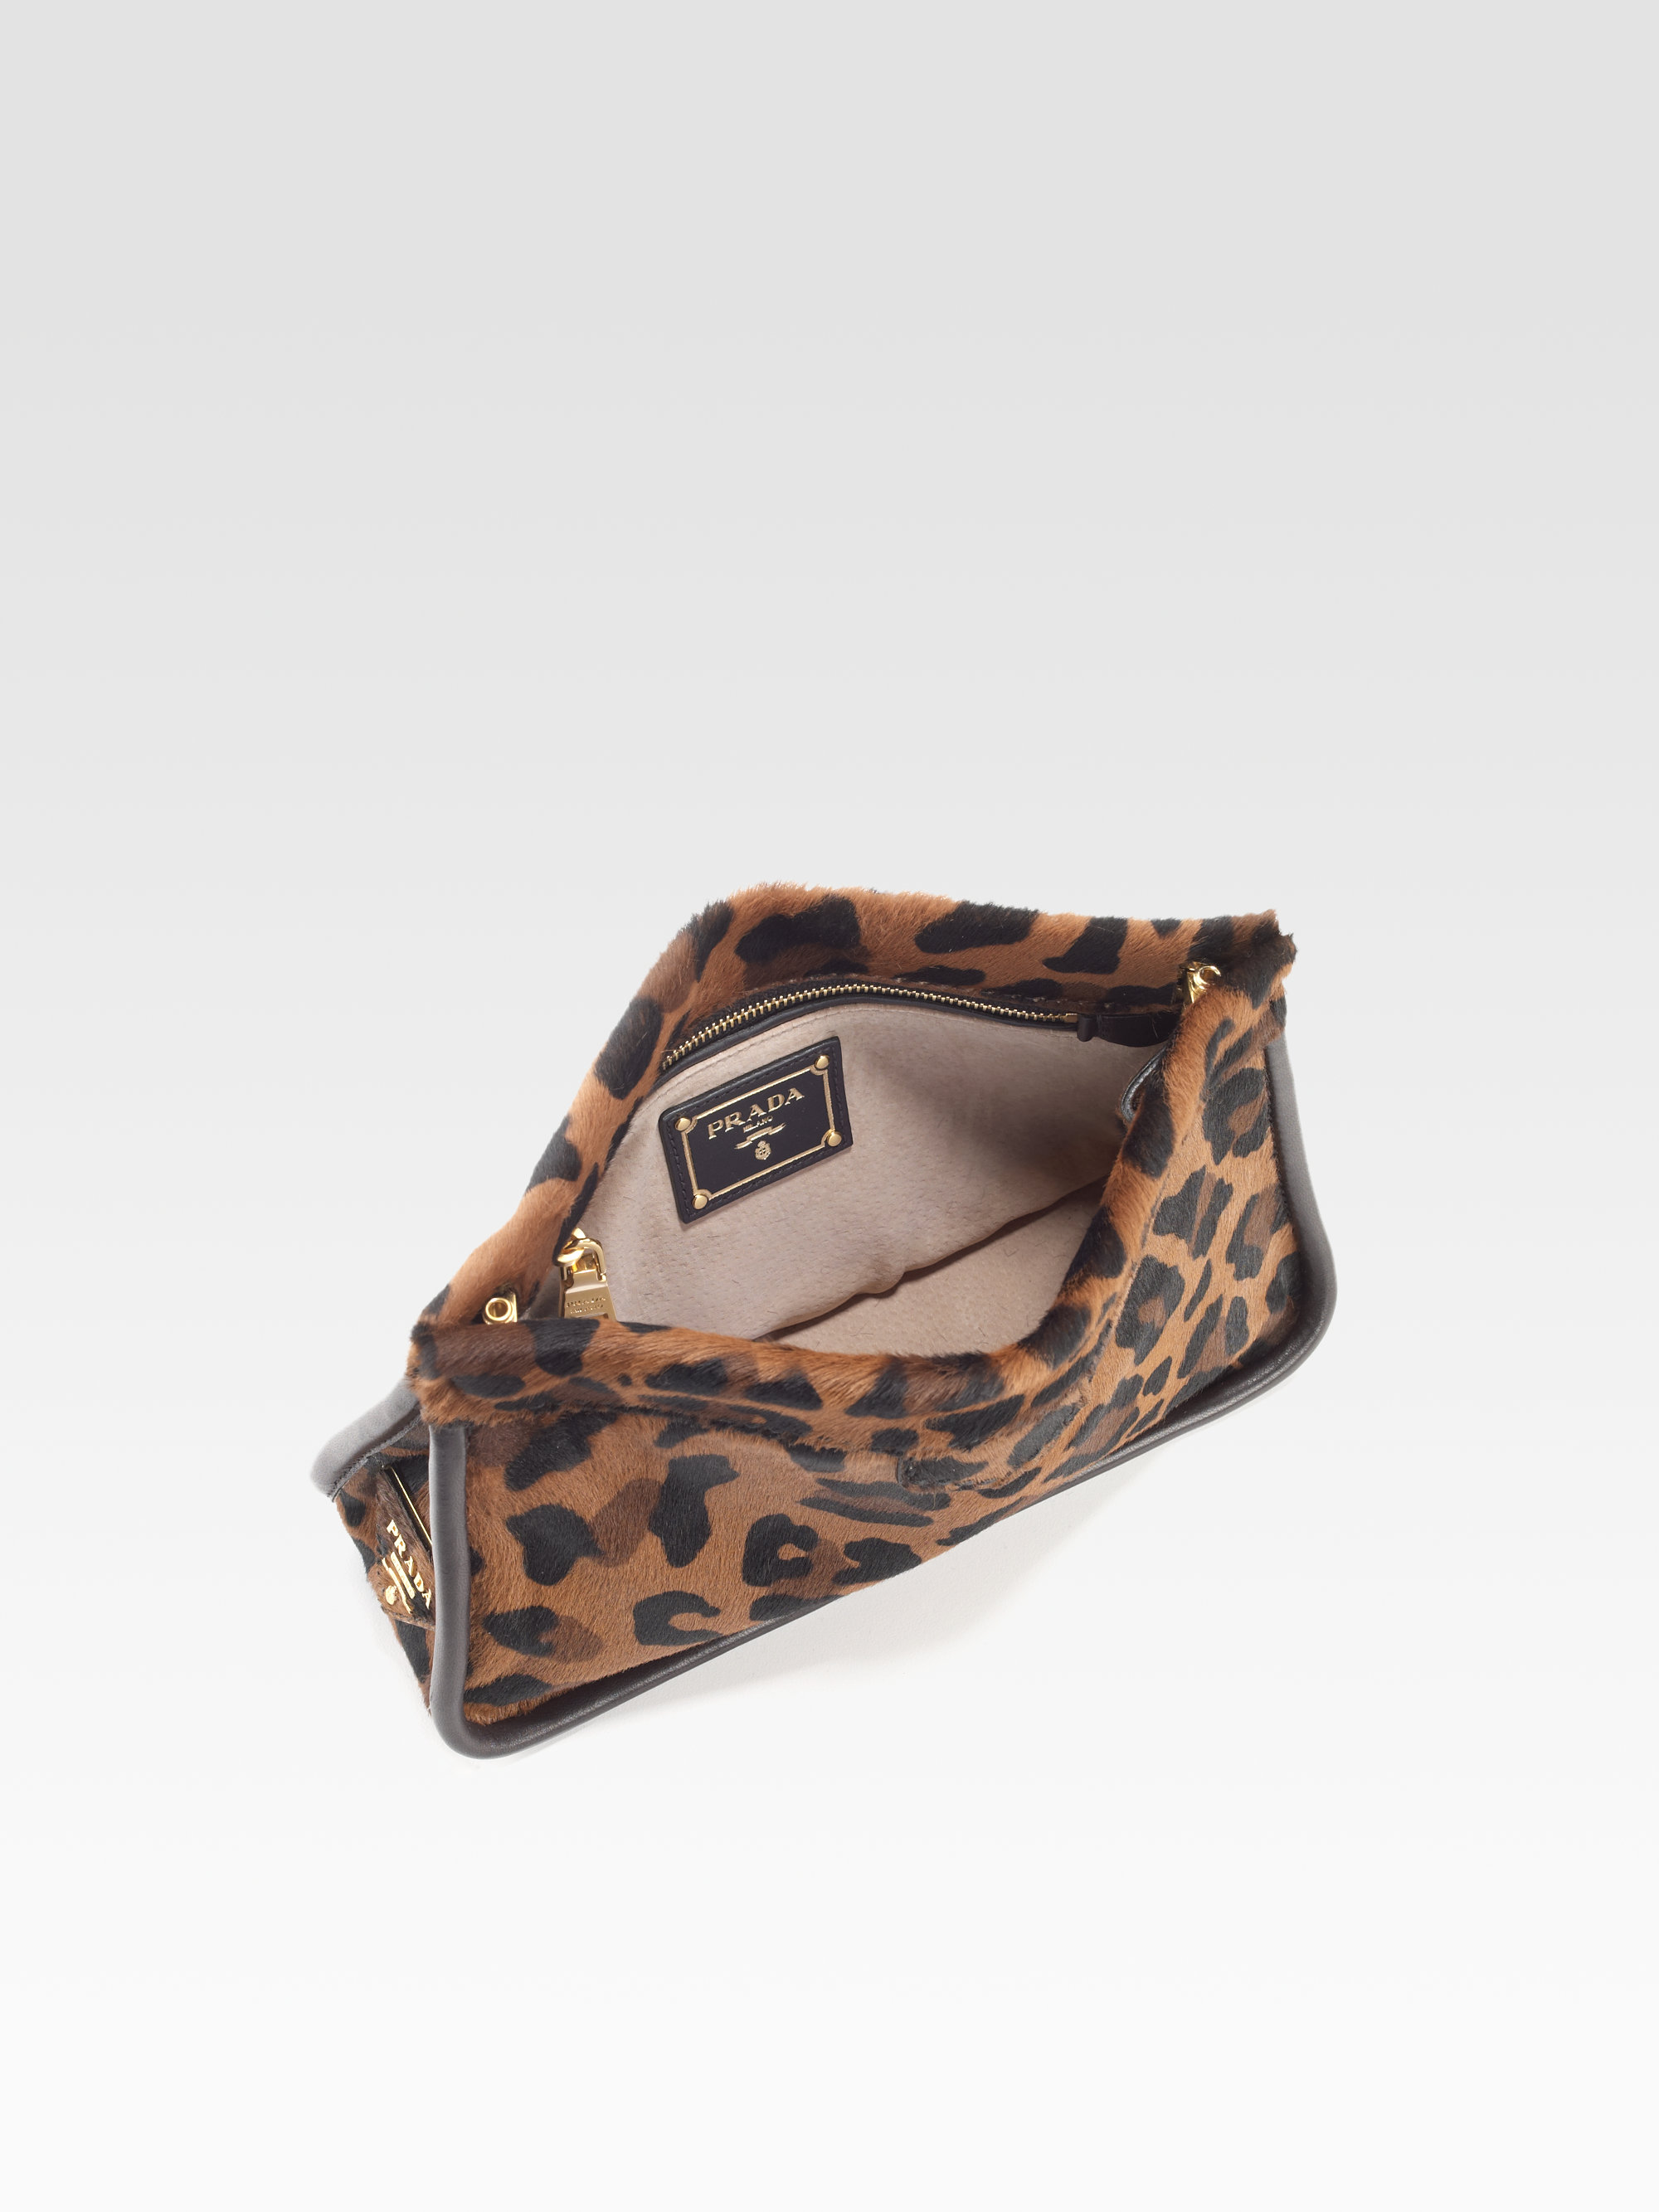 prada vela messenger bag sale - Prada Cavallino Printed Haircalf Clutch in Brown (leopard) | Lyst